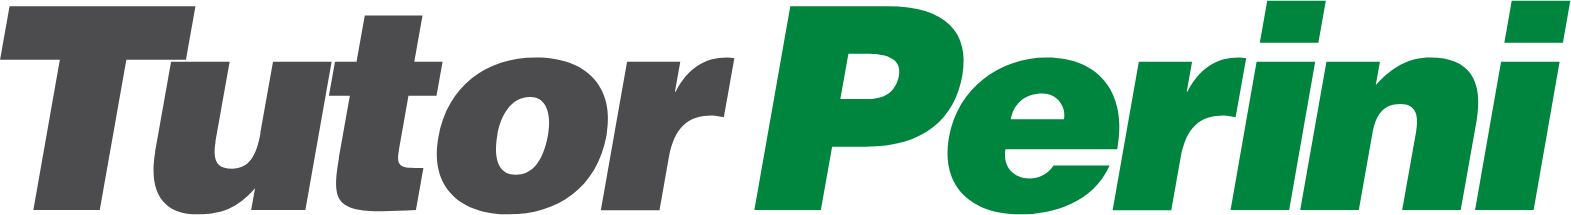 Tutor Perini
 logo large (transparent PNG)